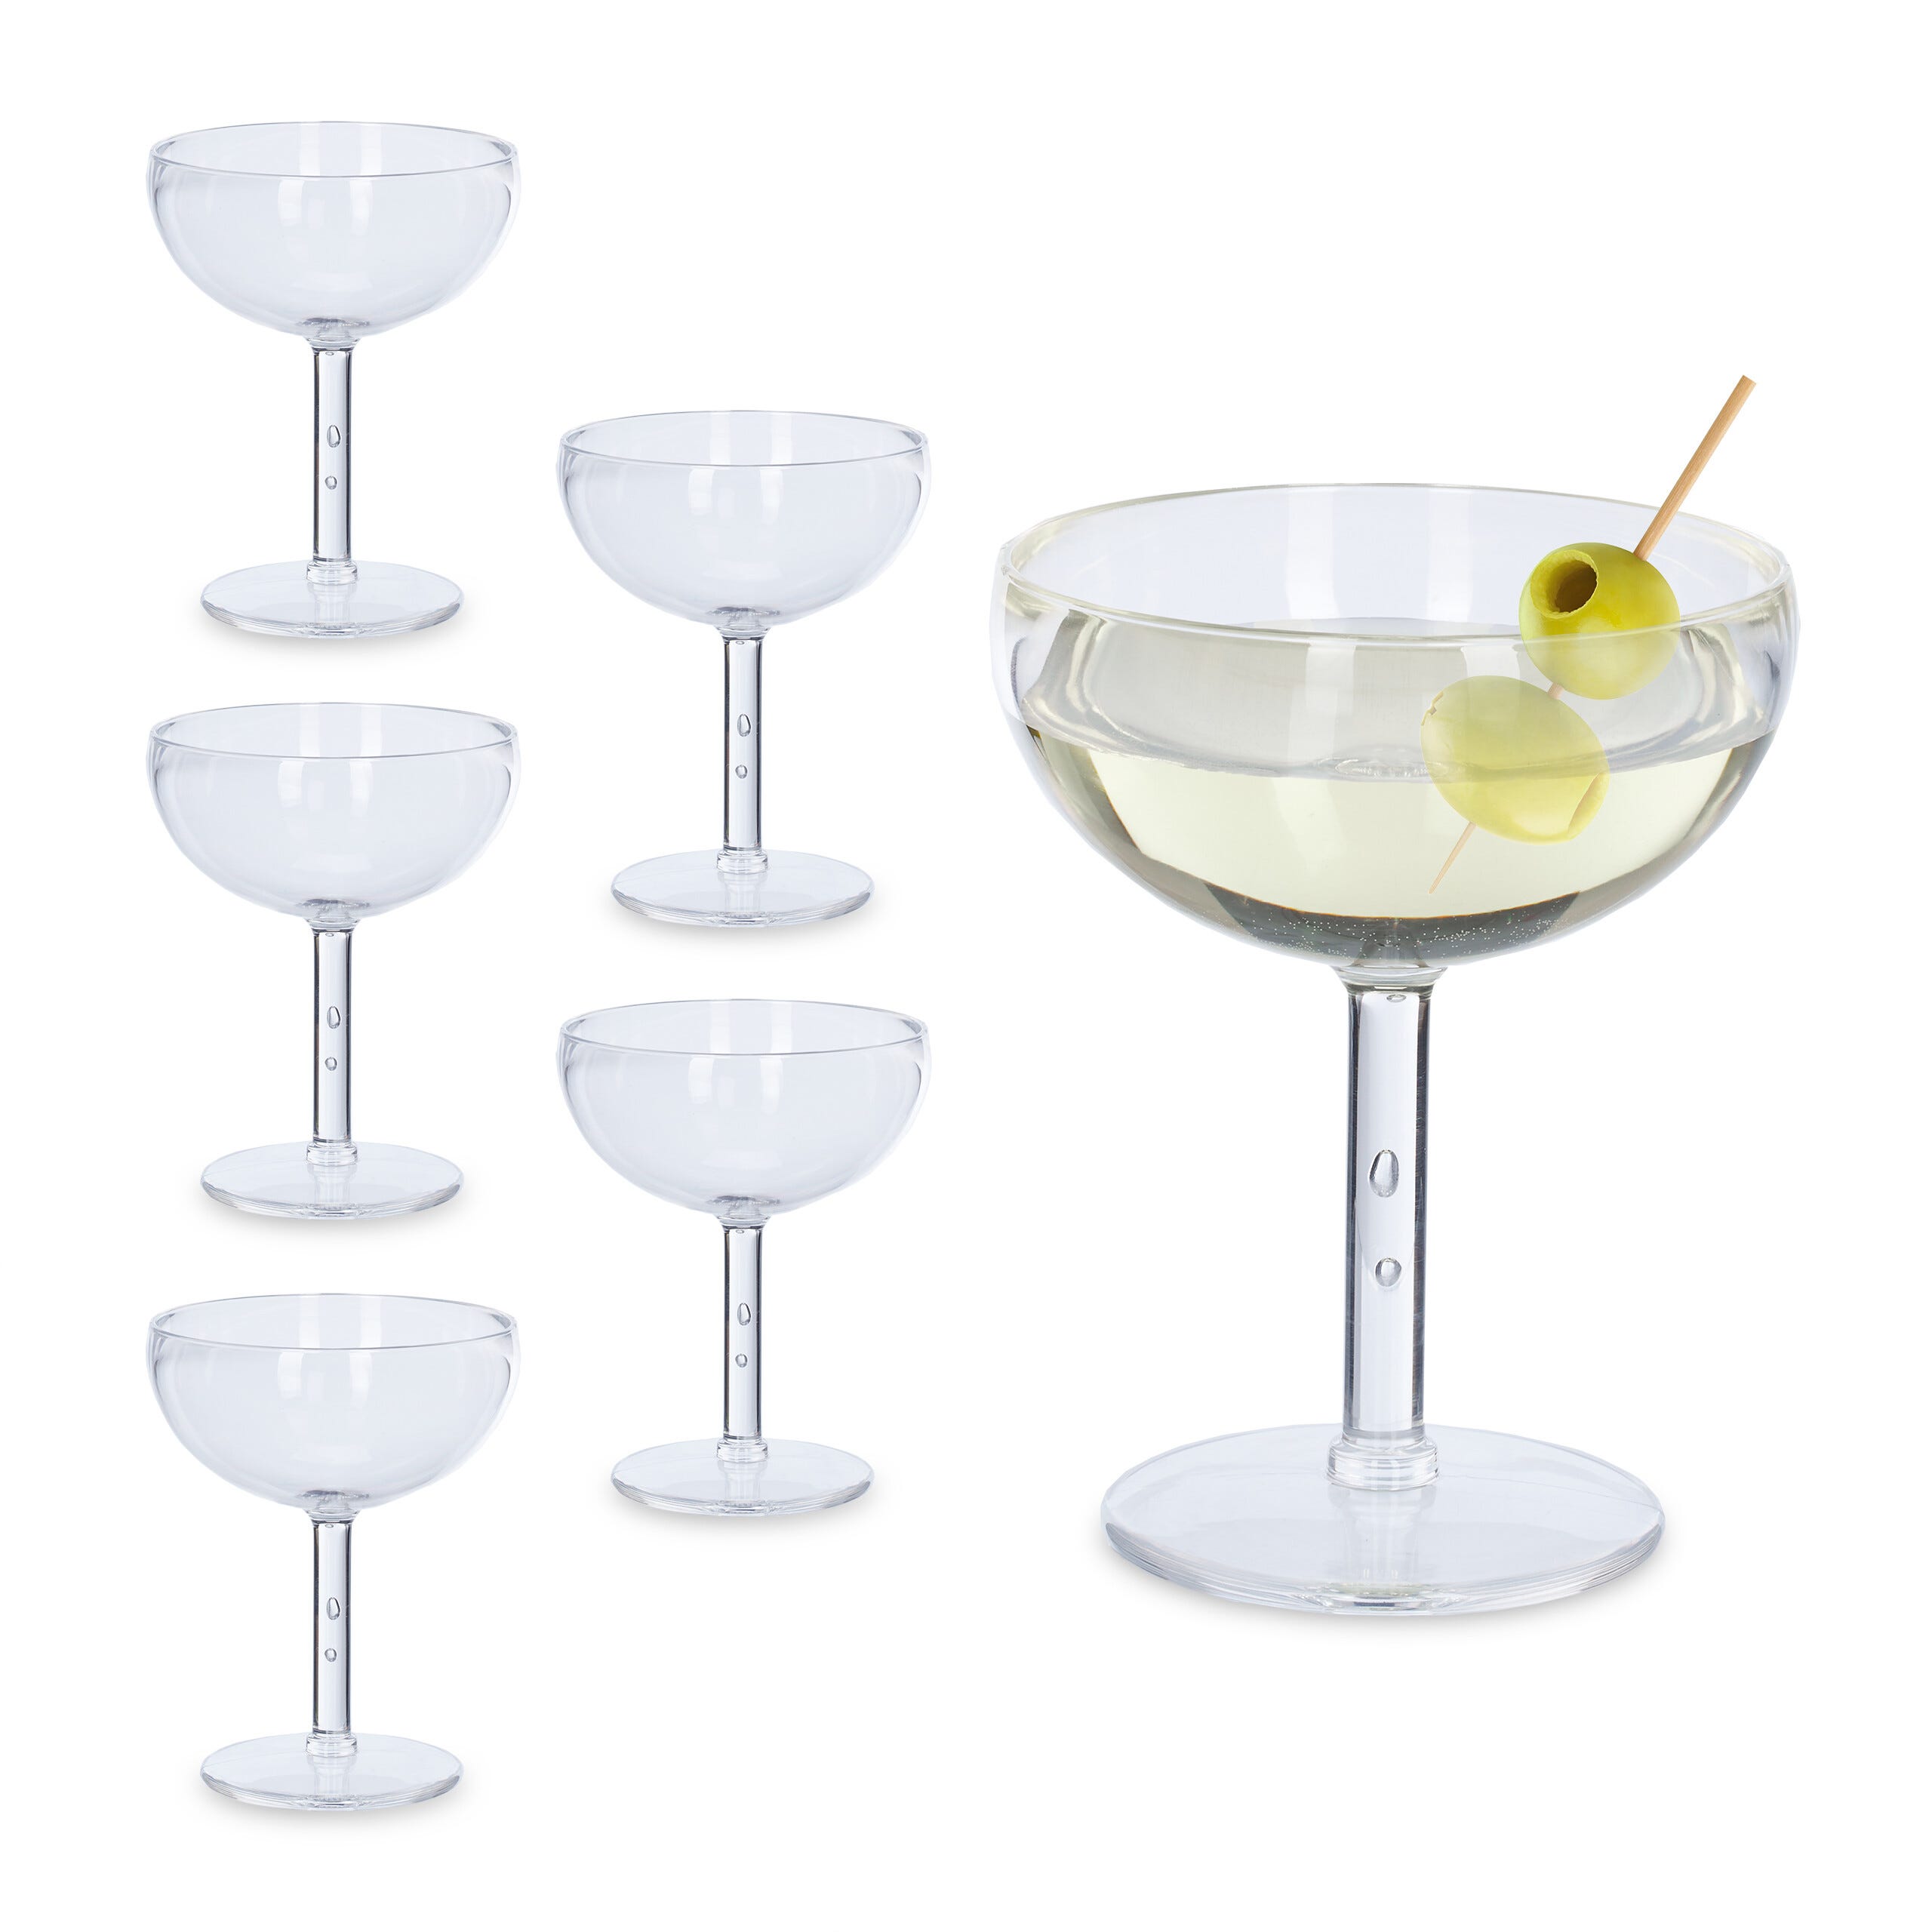 I bicchieri da cocktail migliori da comprare online